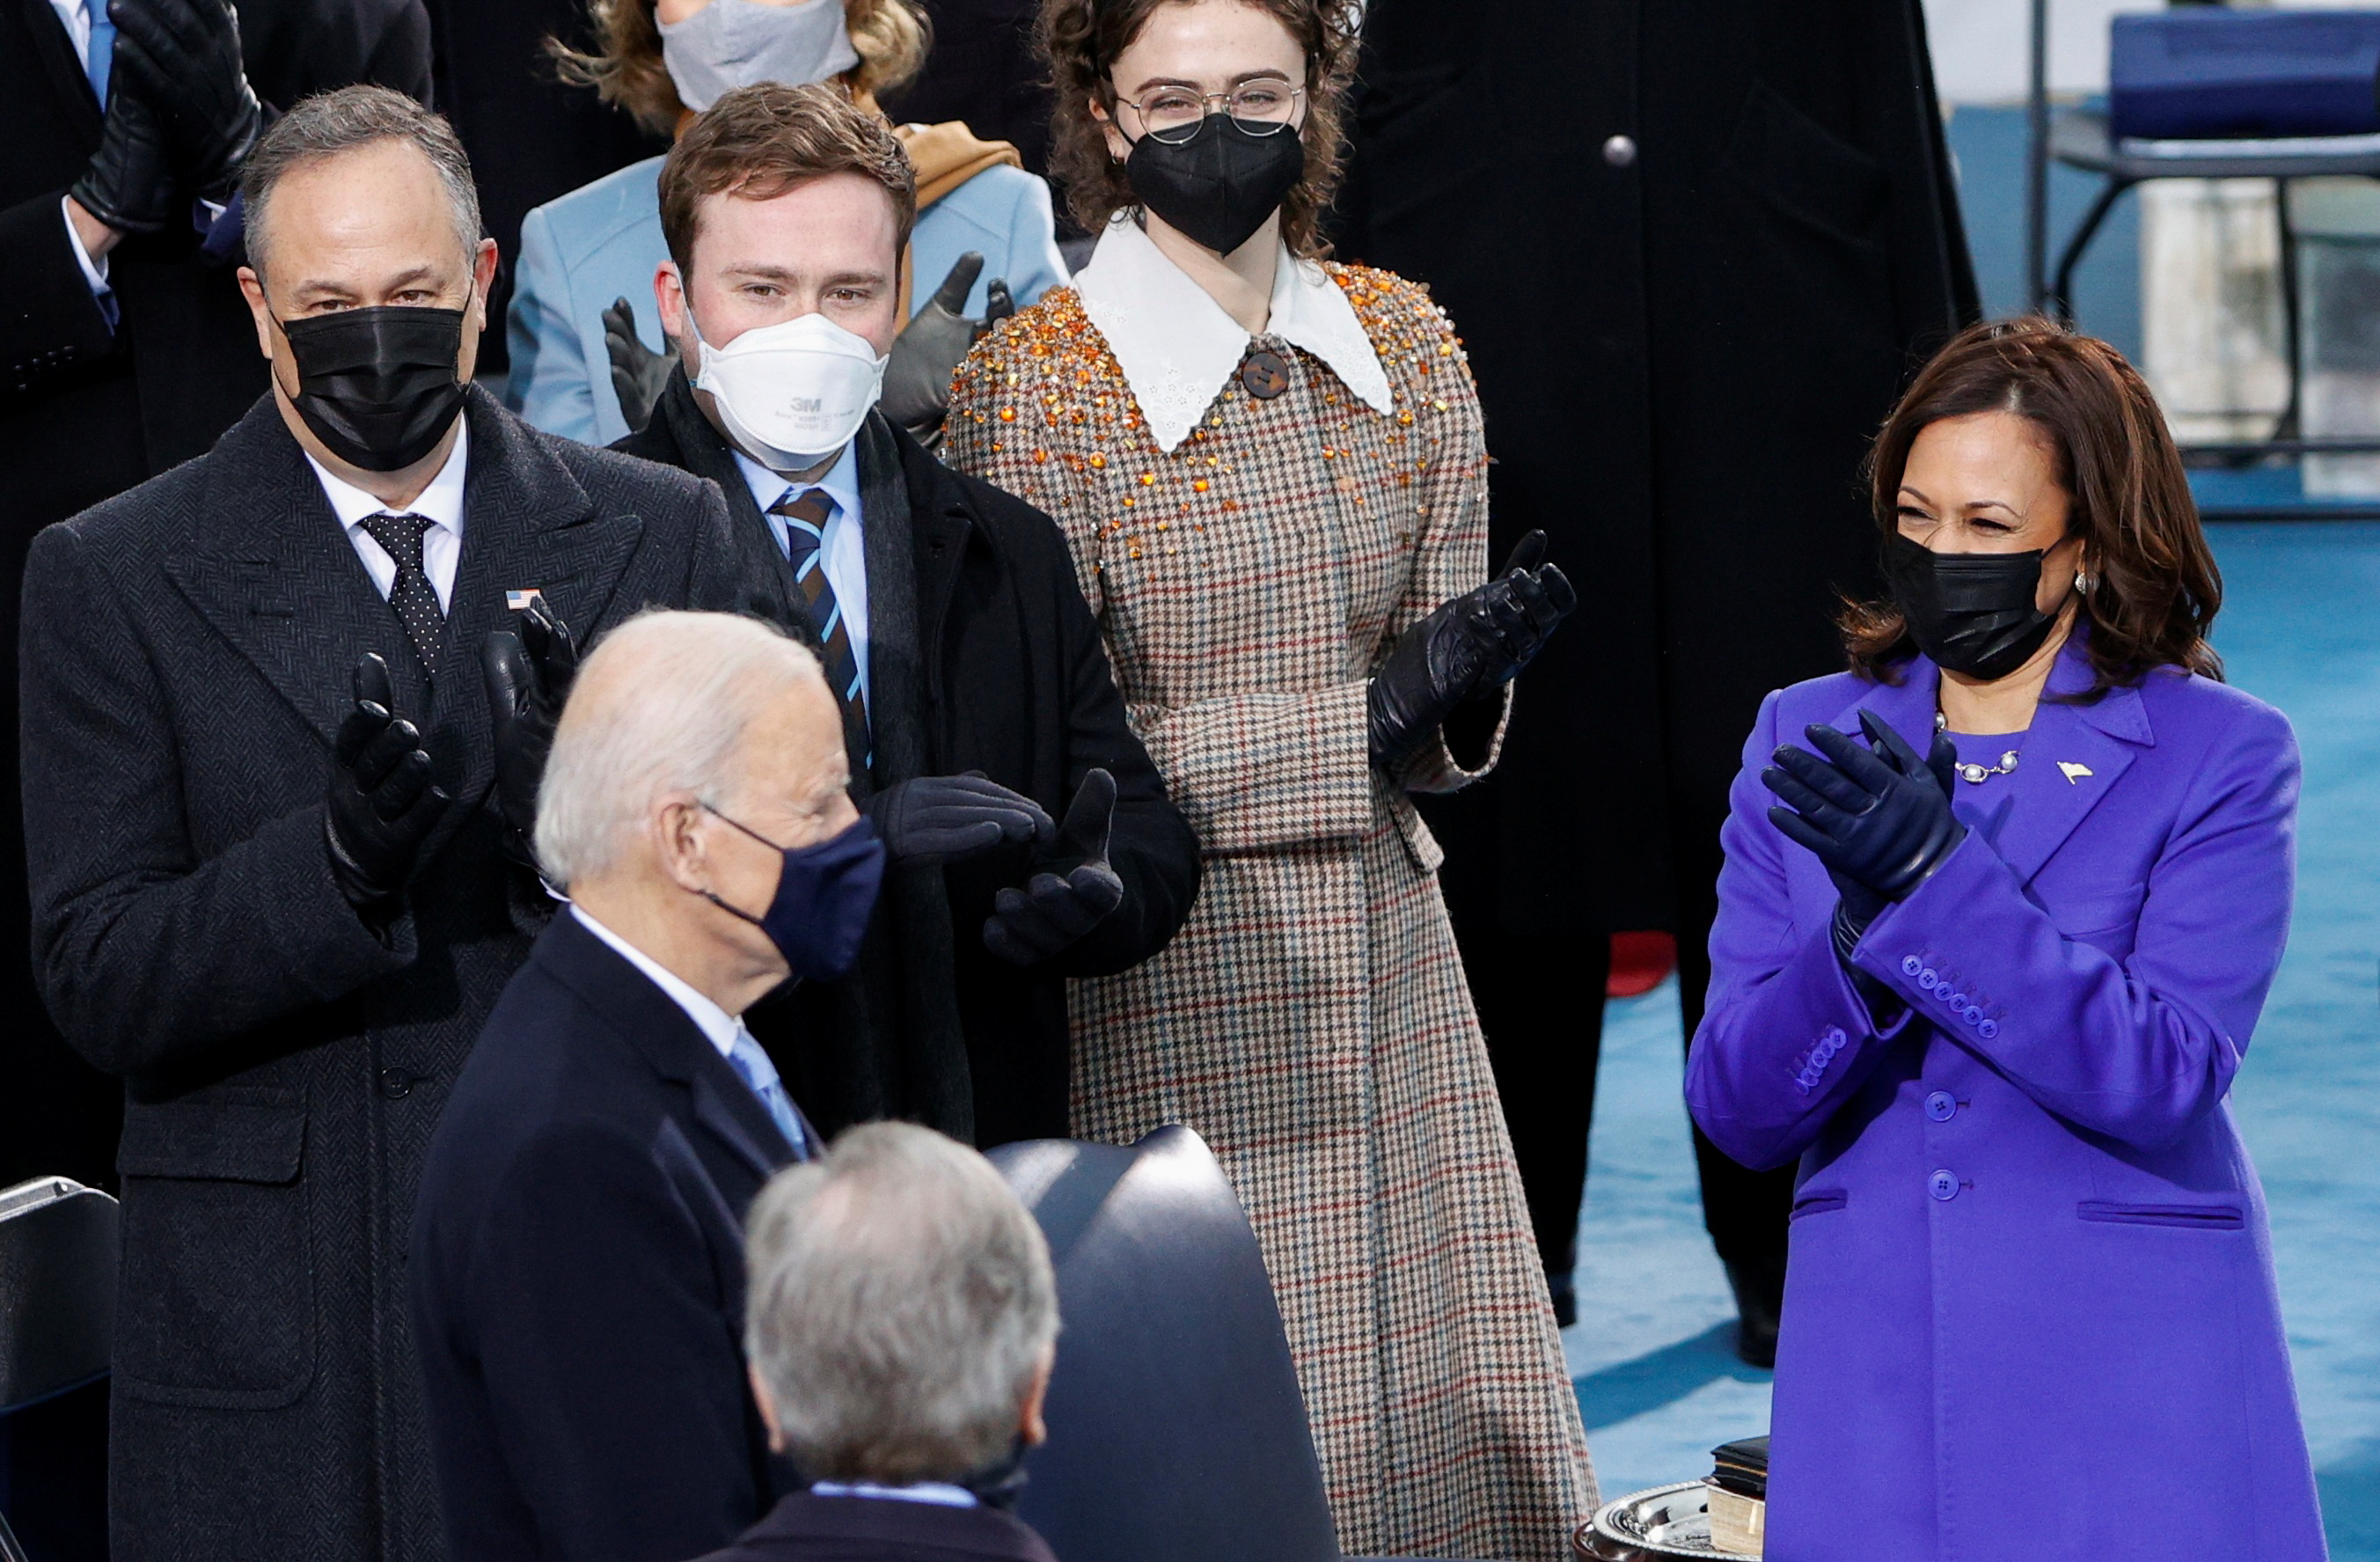 IN PHOTOS: American design gets spotlight at Biden-Harris inauguration